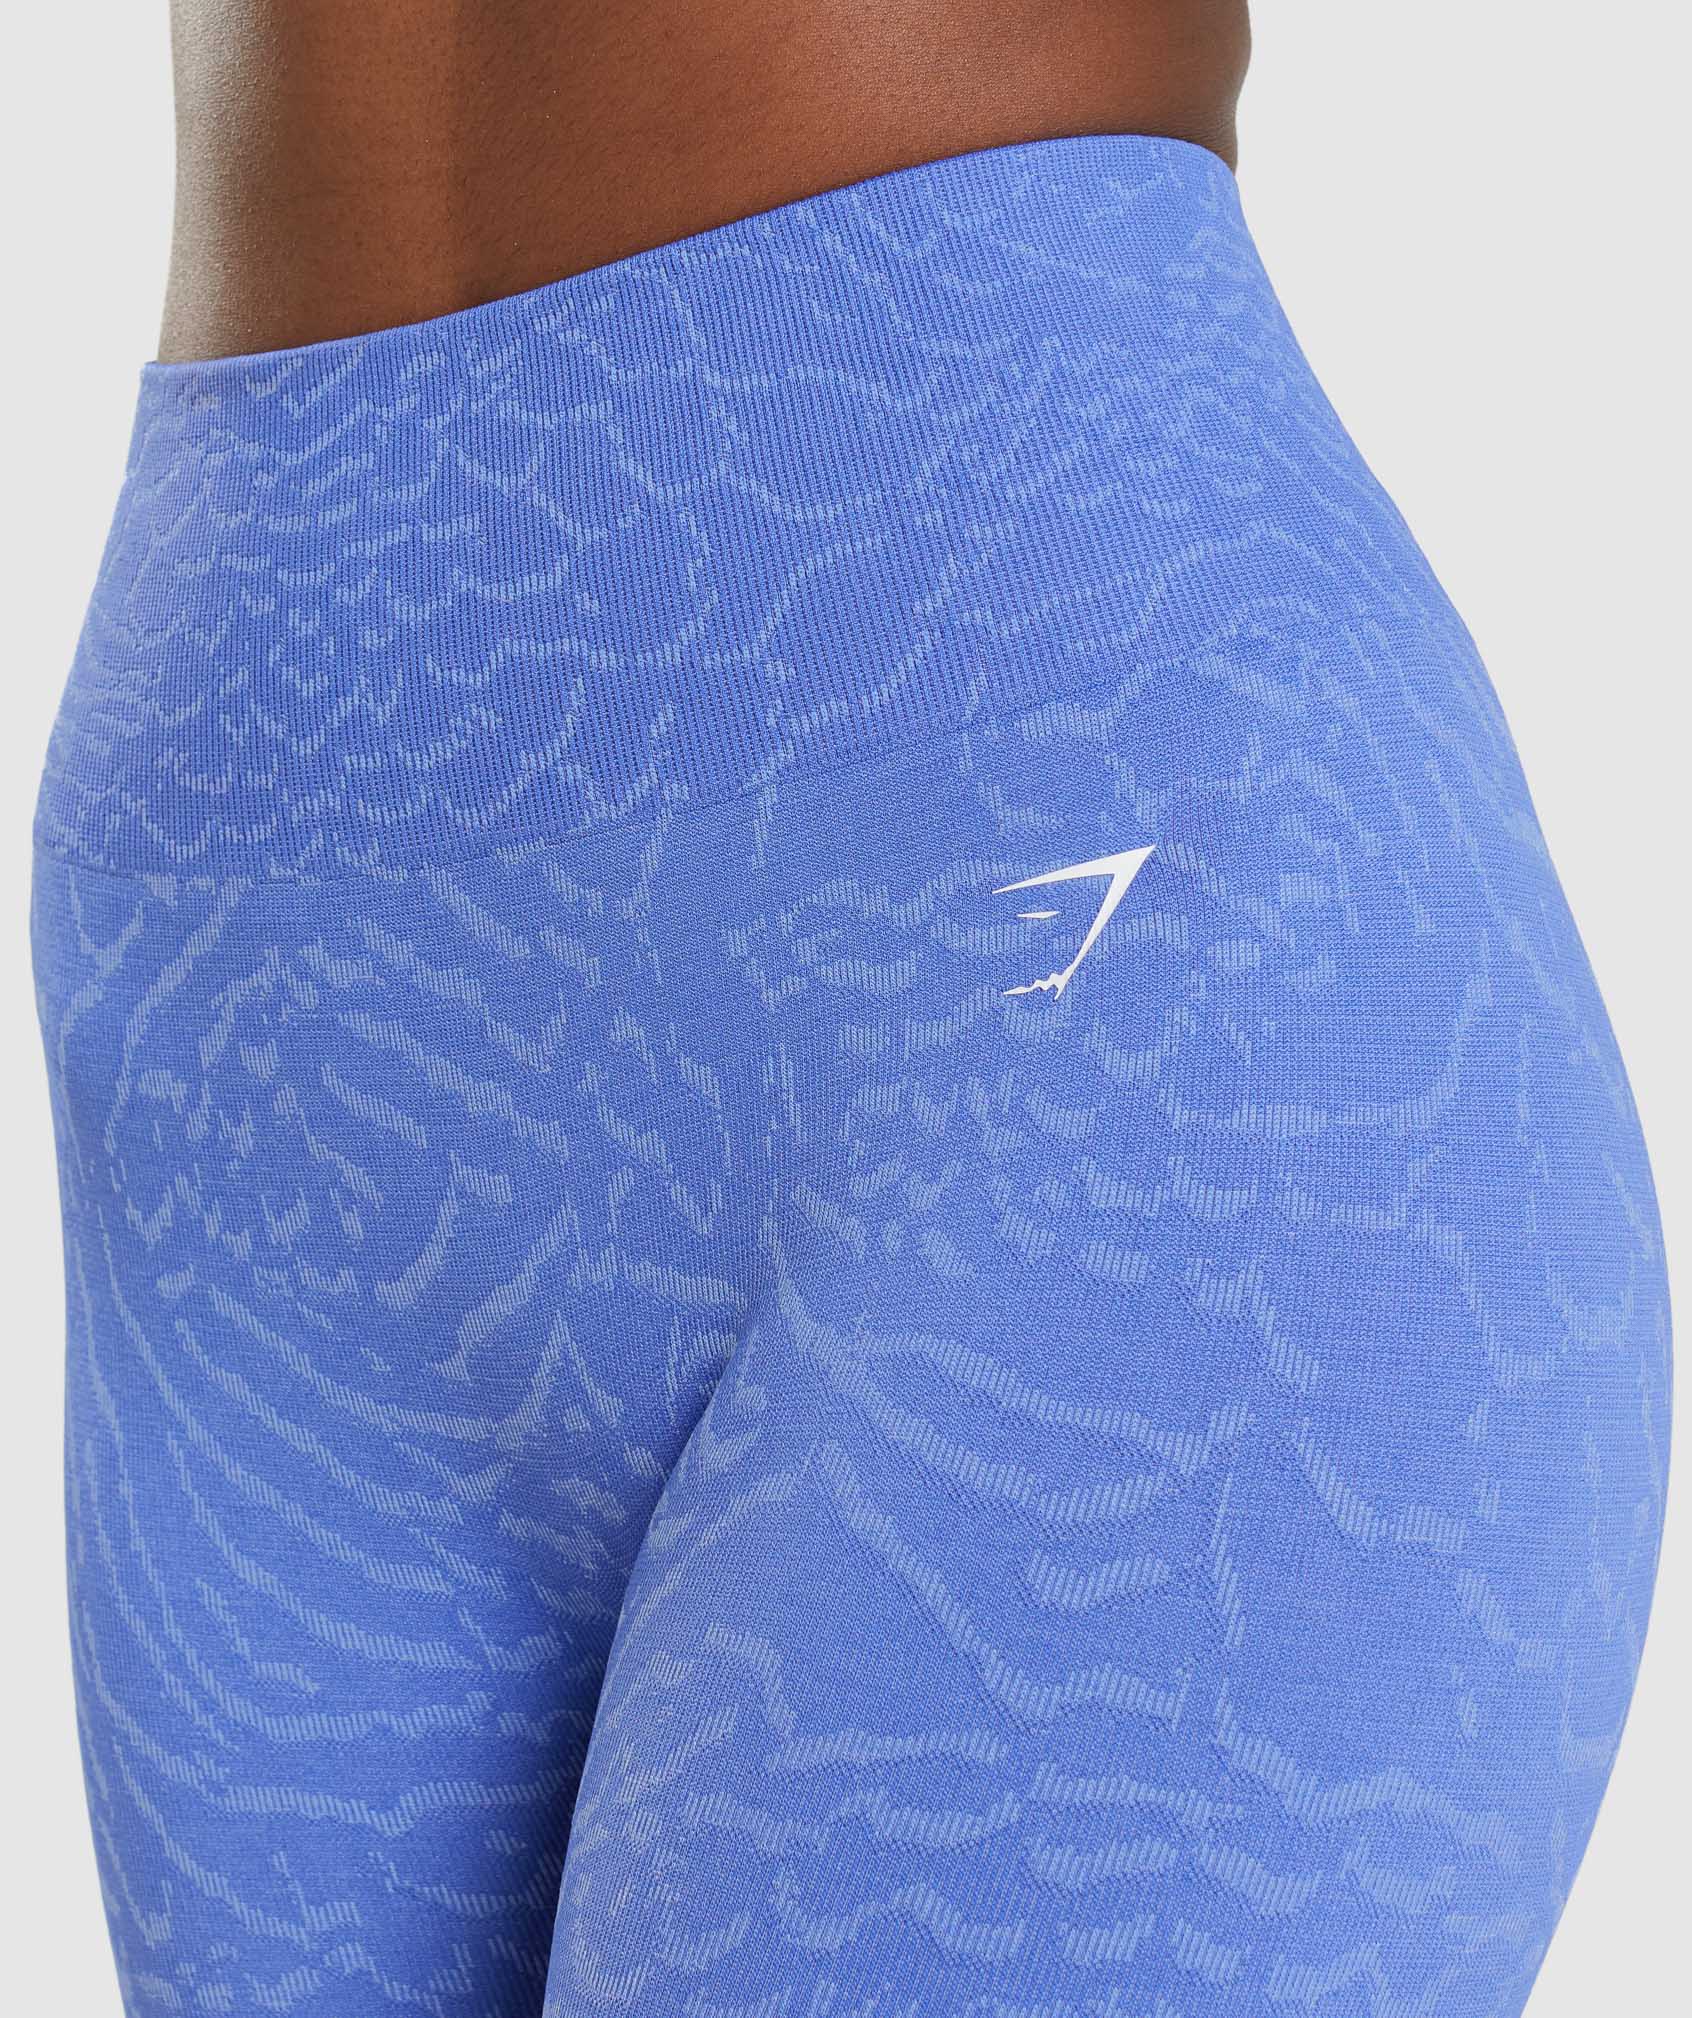 LEGGINGS - Women's Gymshark Adapt Seamless Powder Blue Marl Leggings. Size  XS